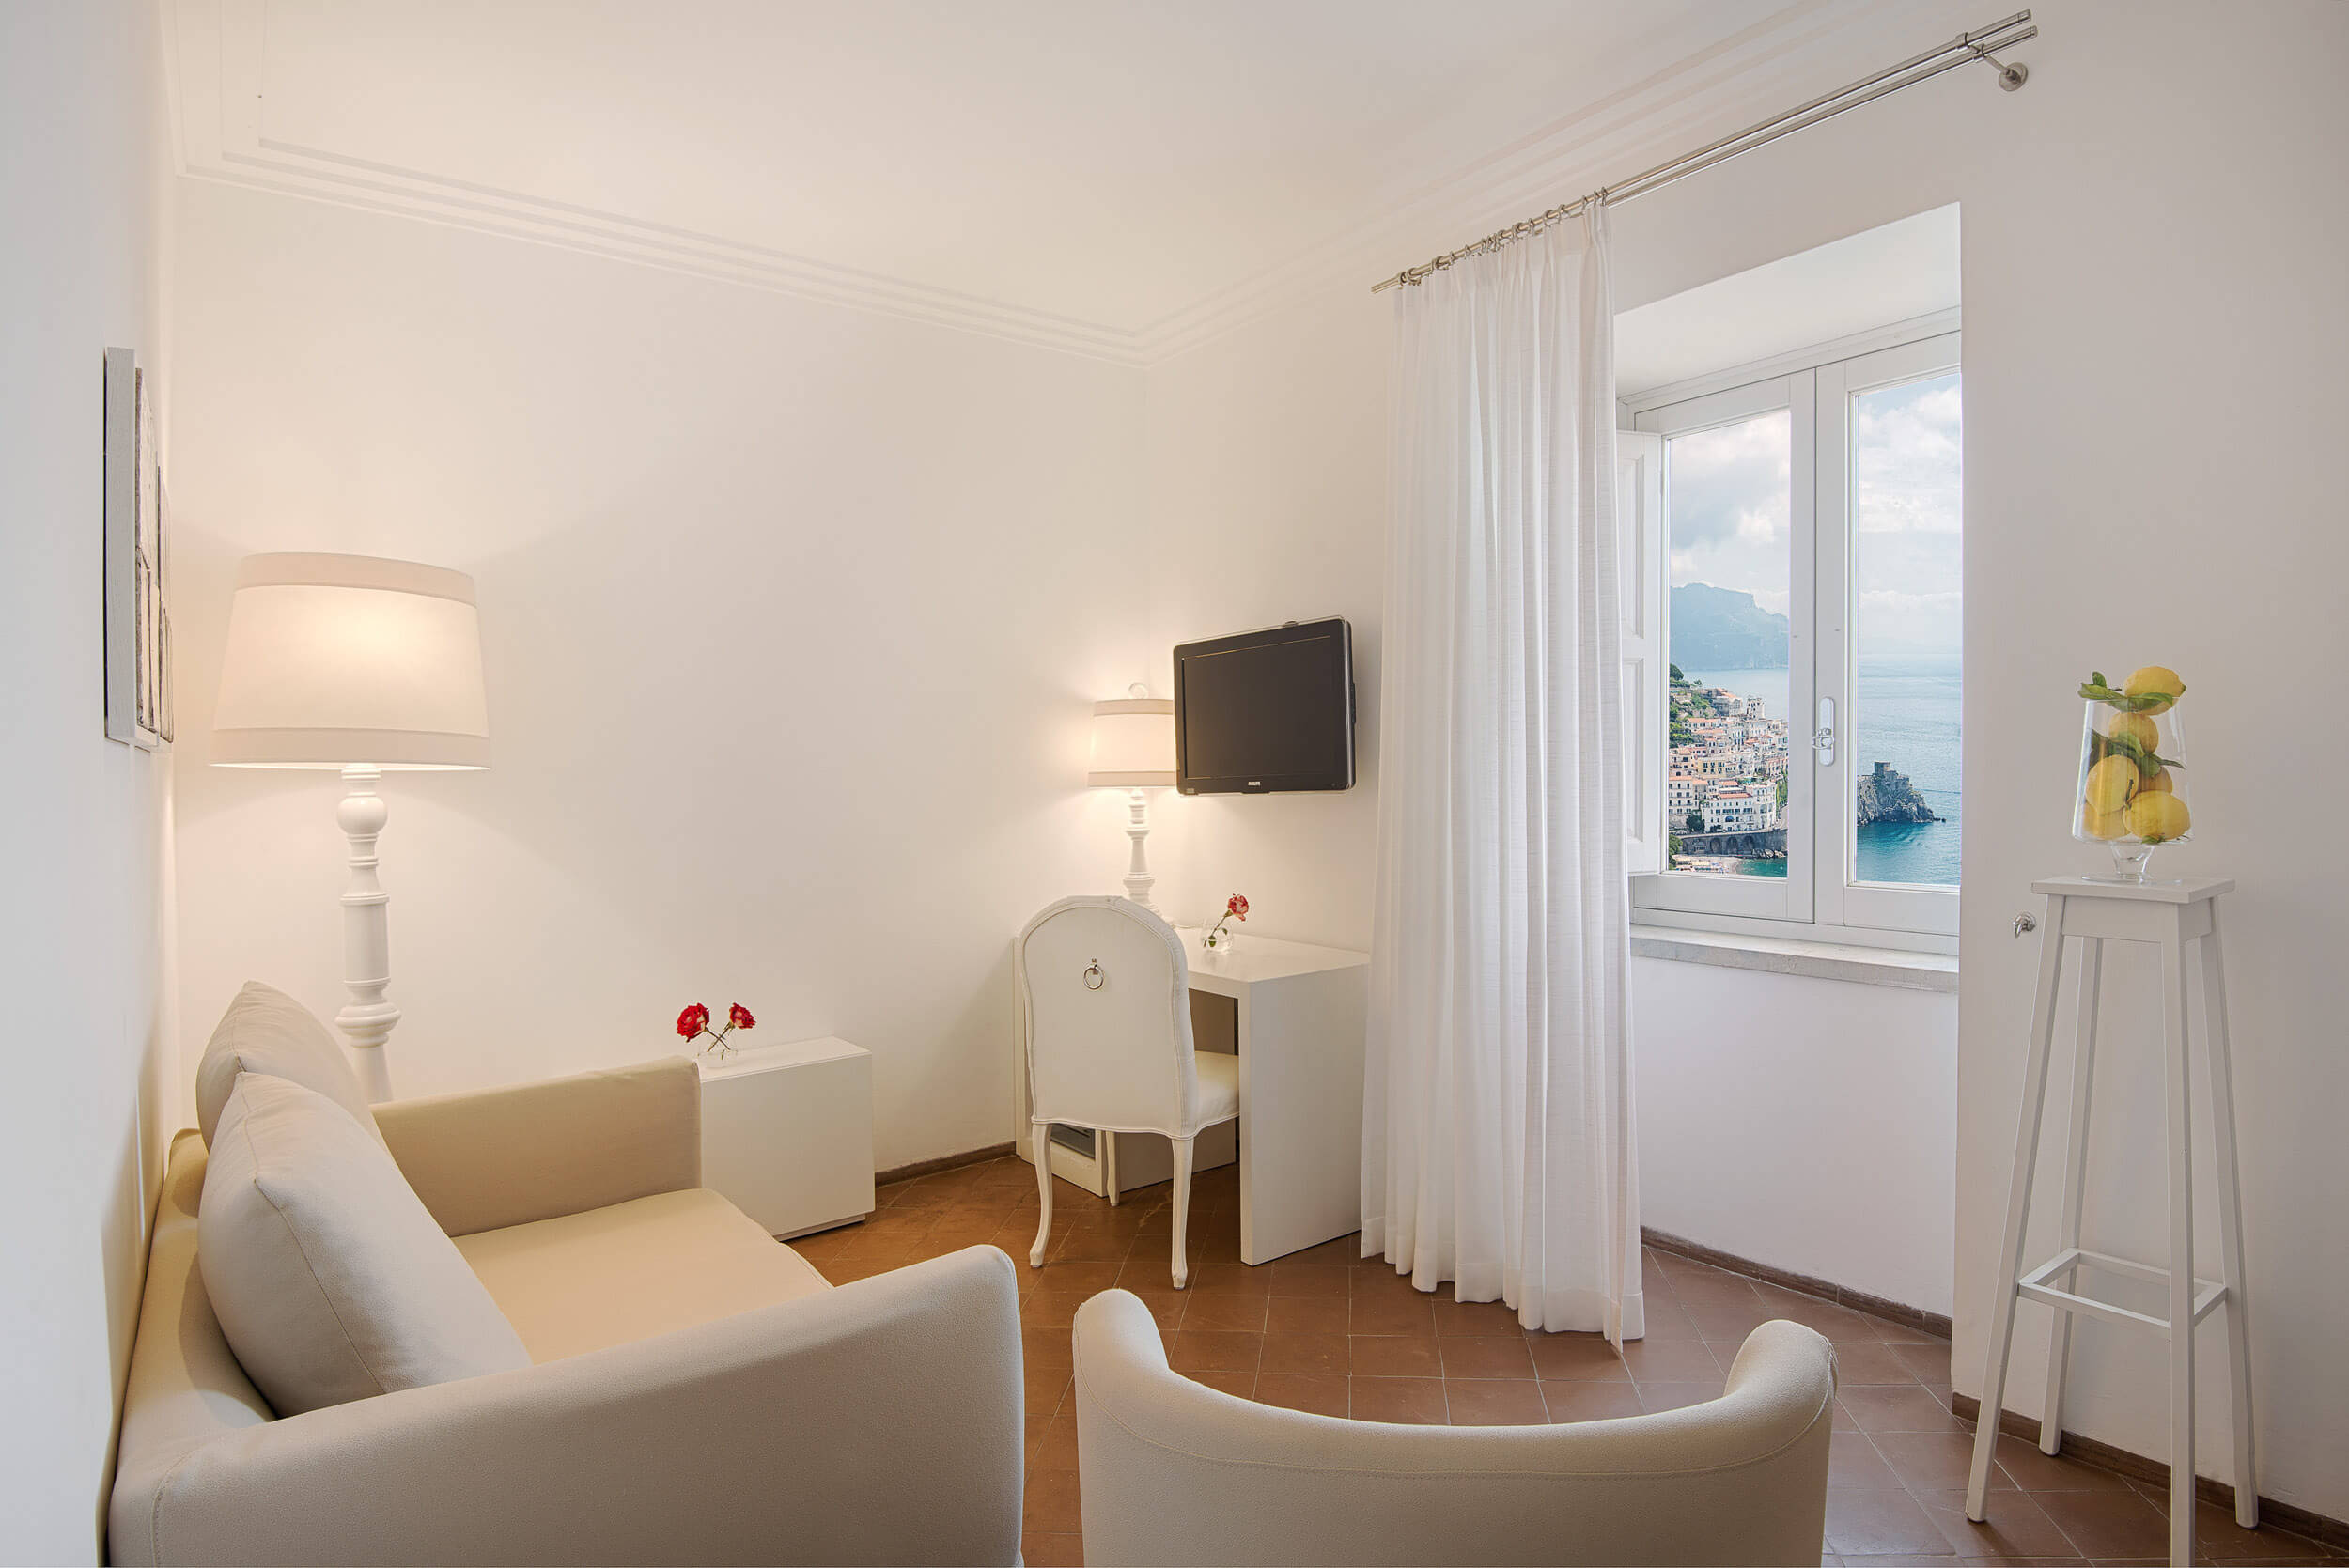 Best luxury hotels Amalfi? NH Collection Grand Hotel Convento di Amalfi